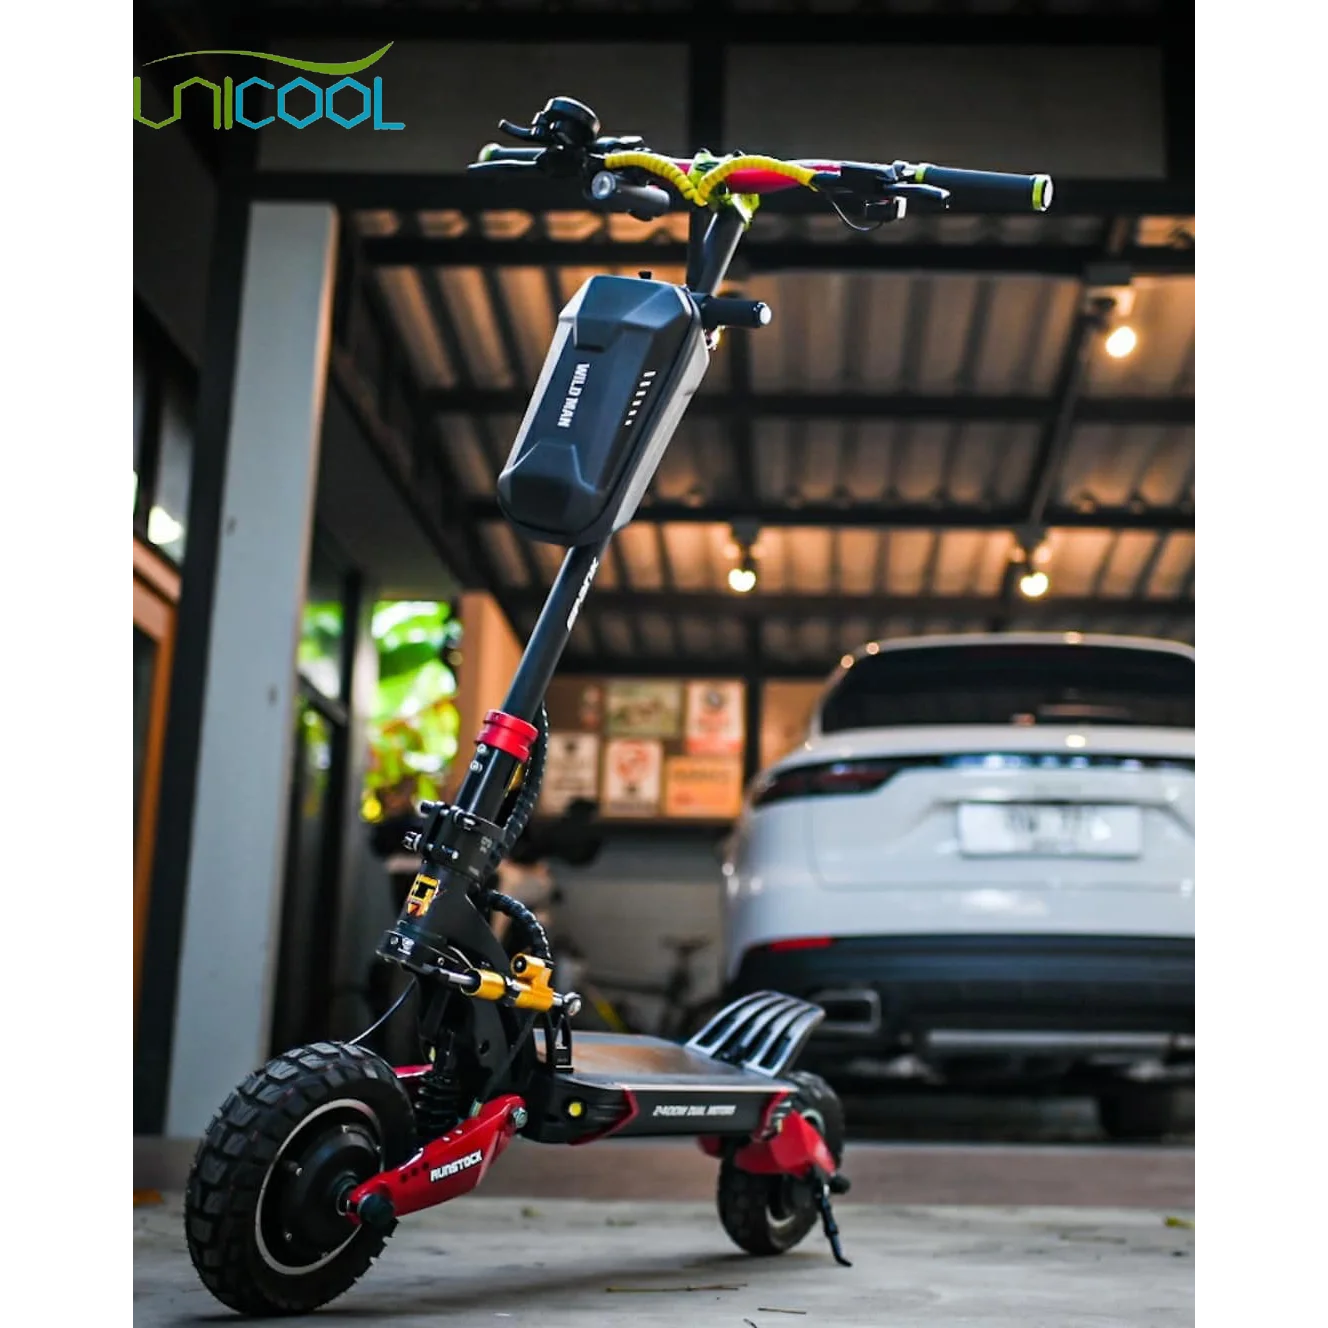 

Unicool nine bot sagway patinete fat scooter 2000w electroscooter elektirikli scooter better than kugoo s1